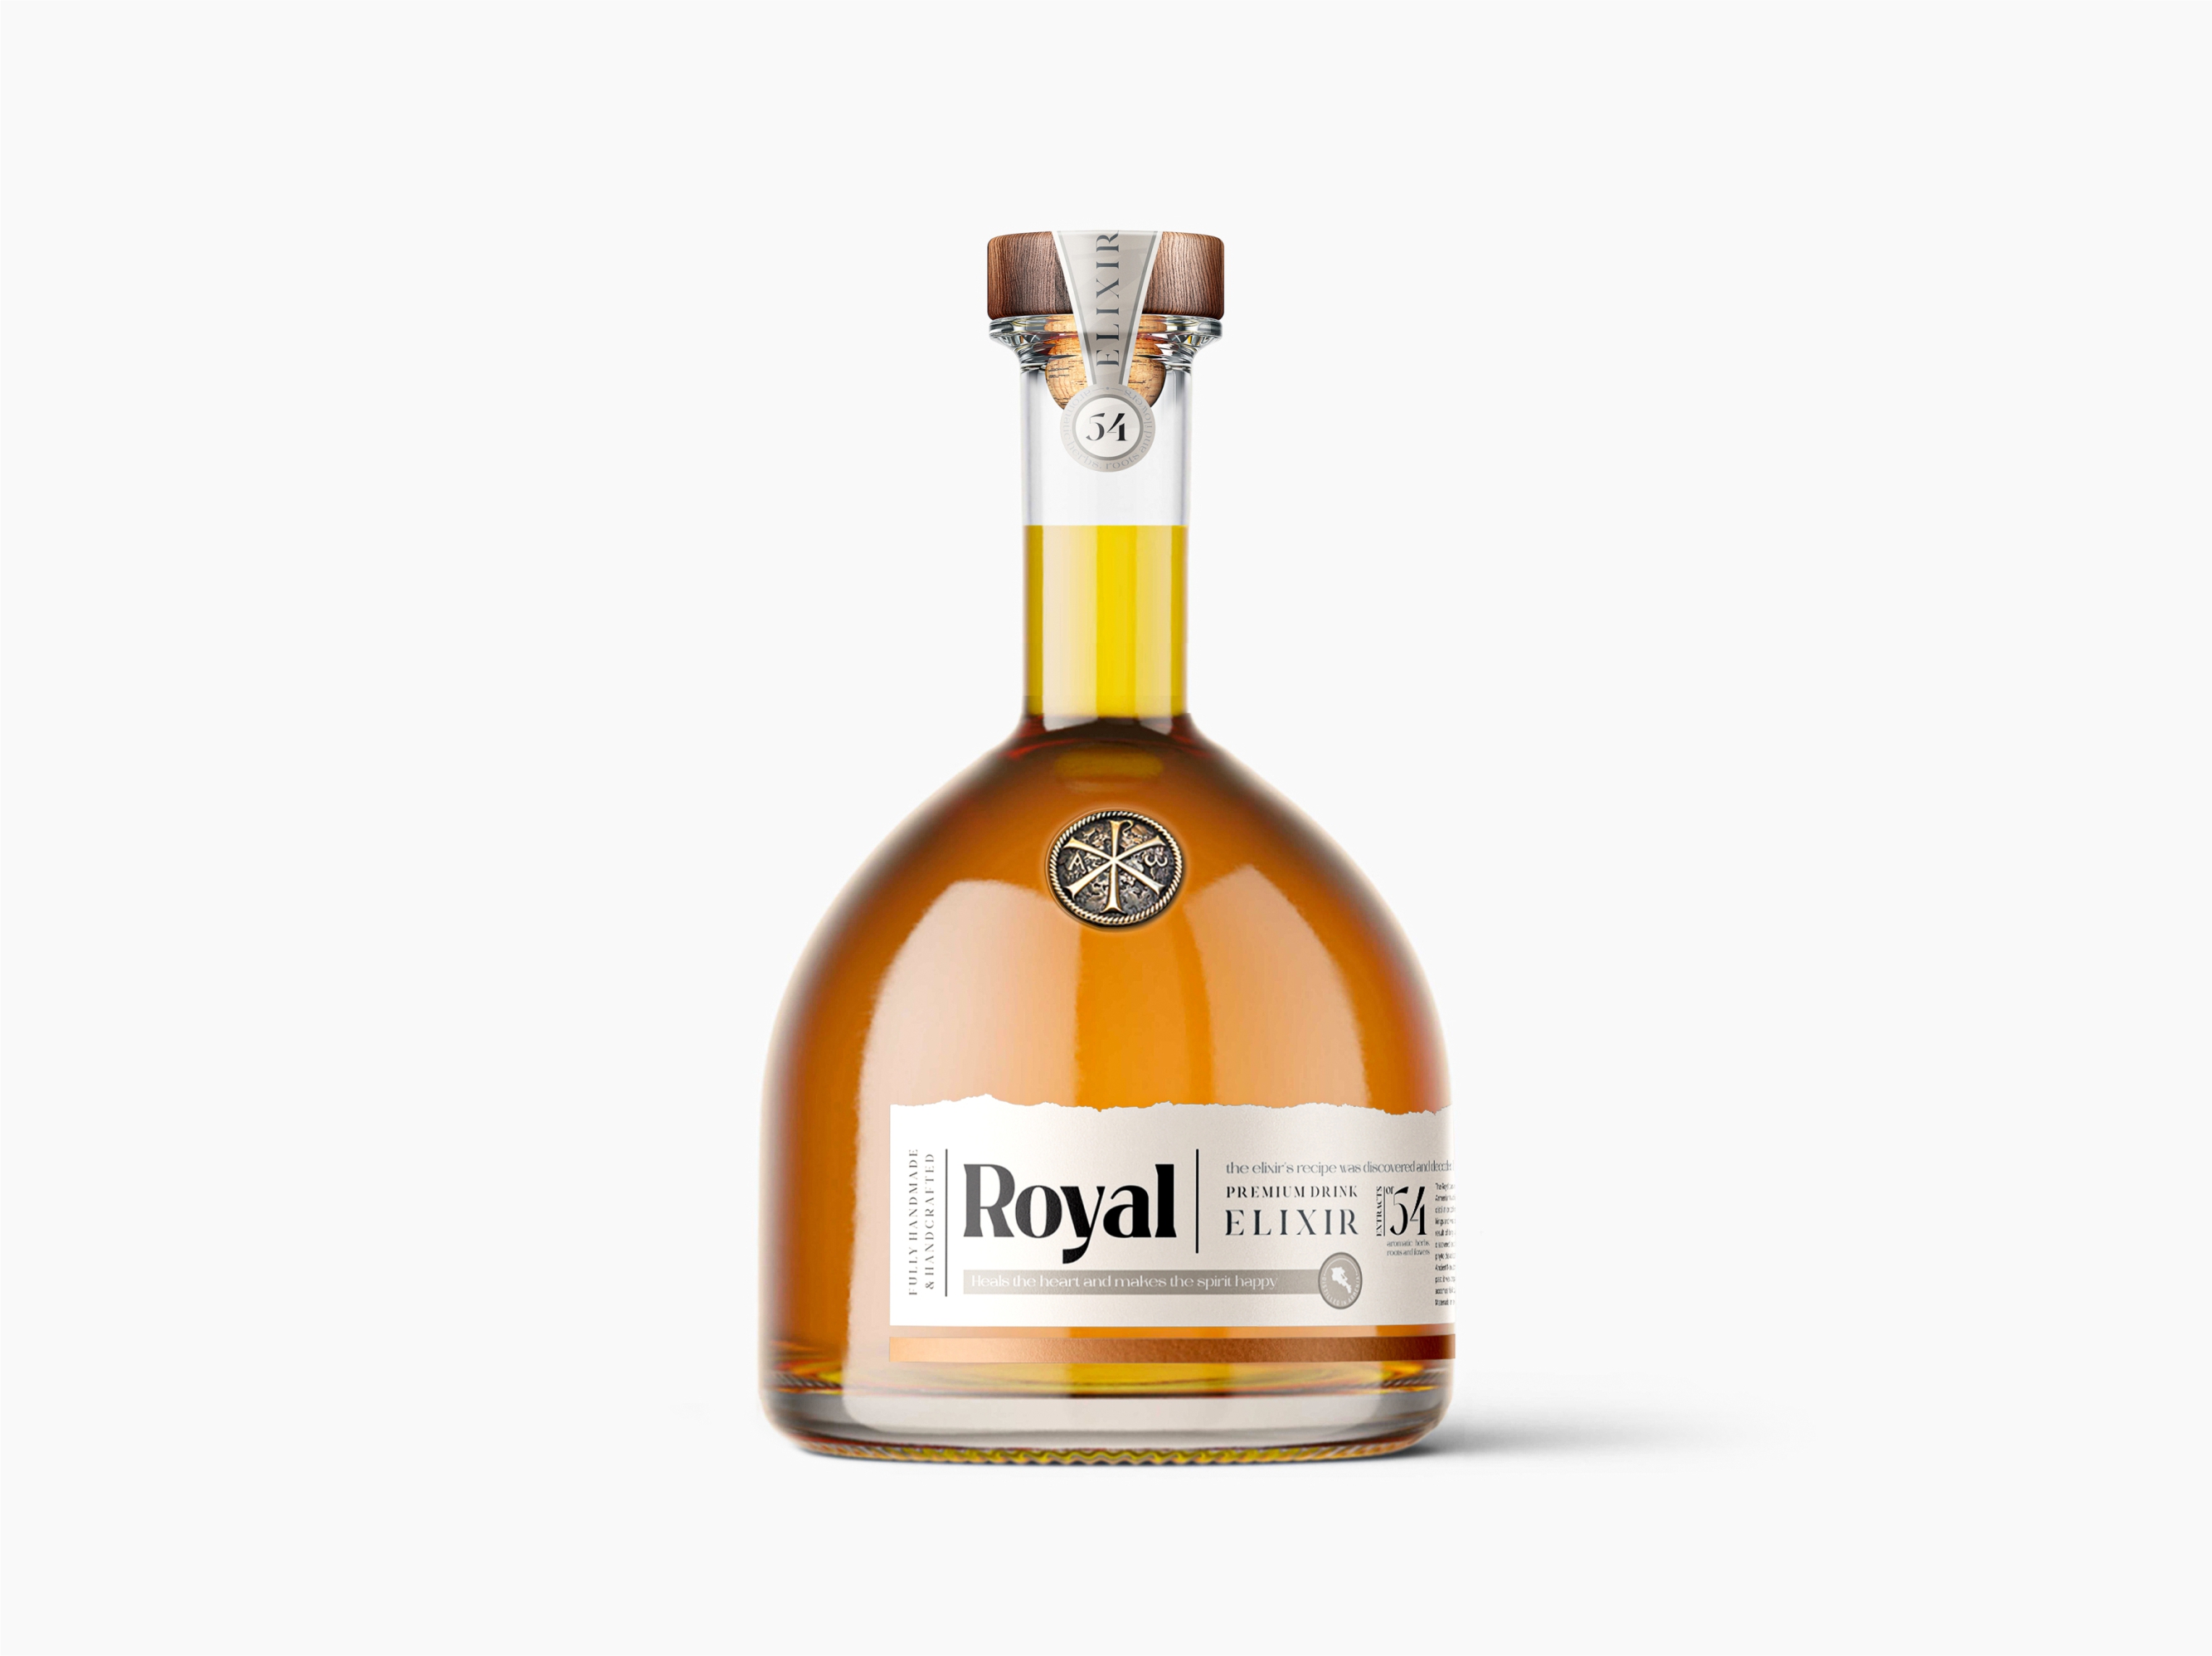 “Royal Elixir” Premium Drink